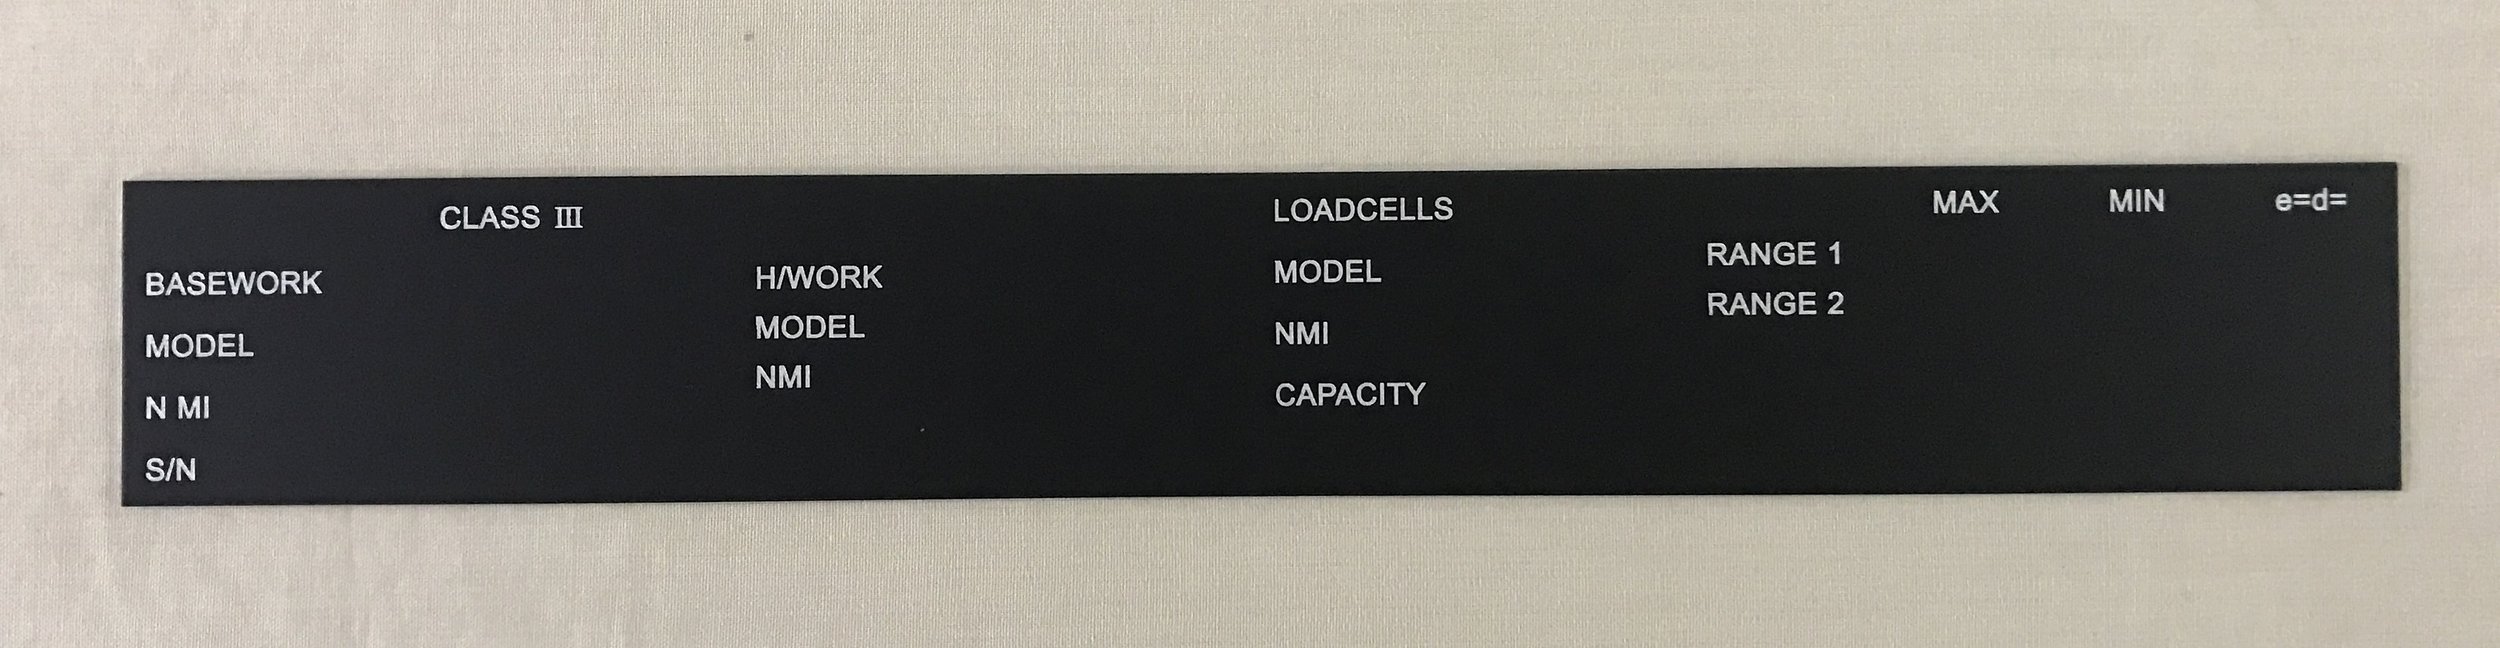 Laser Engraved Name Plate